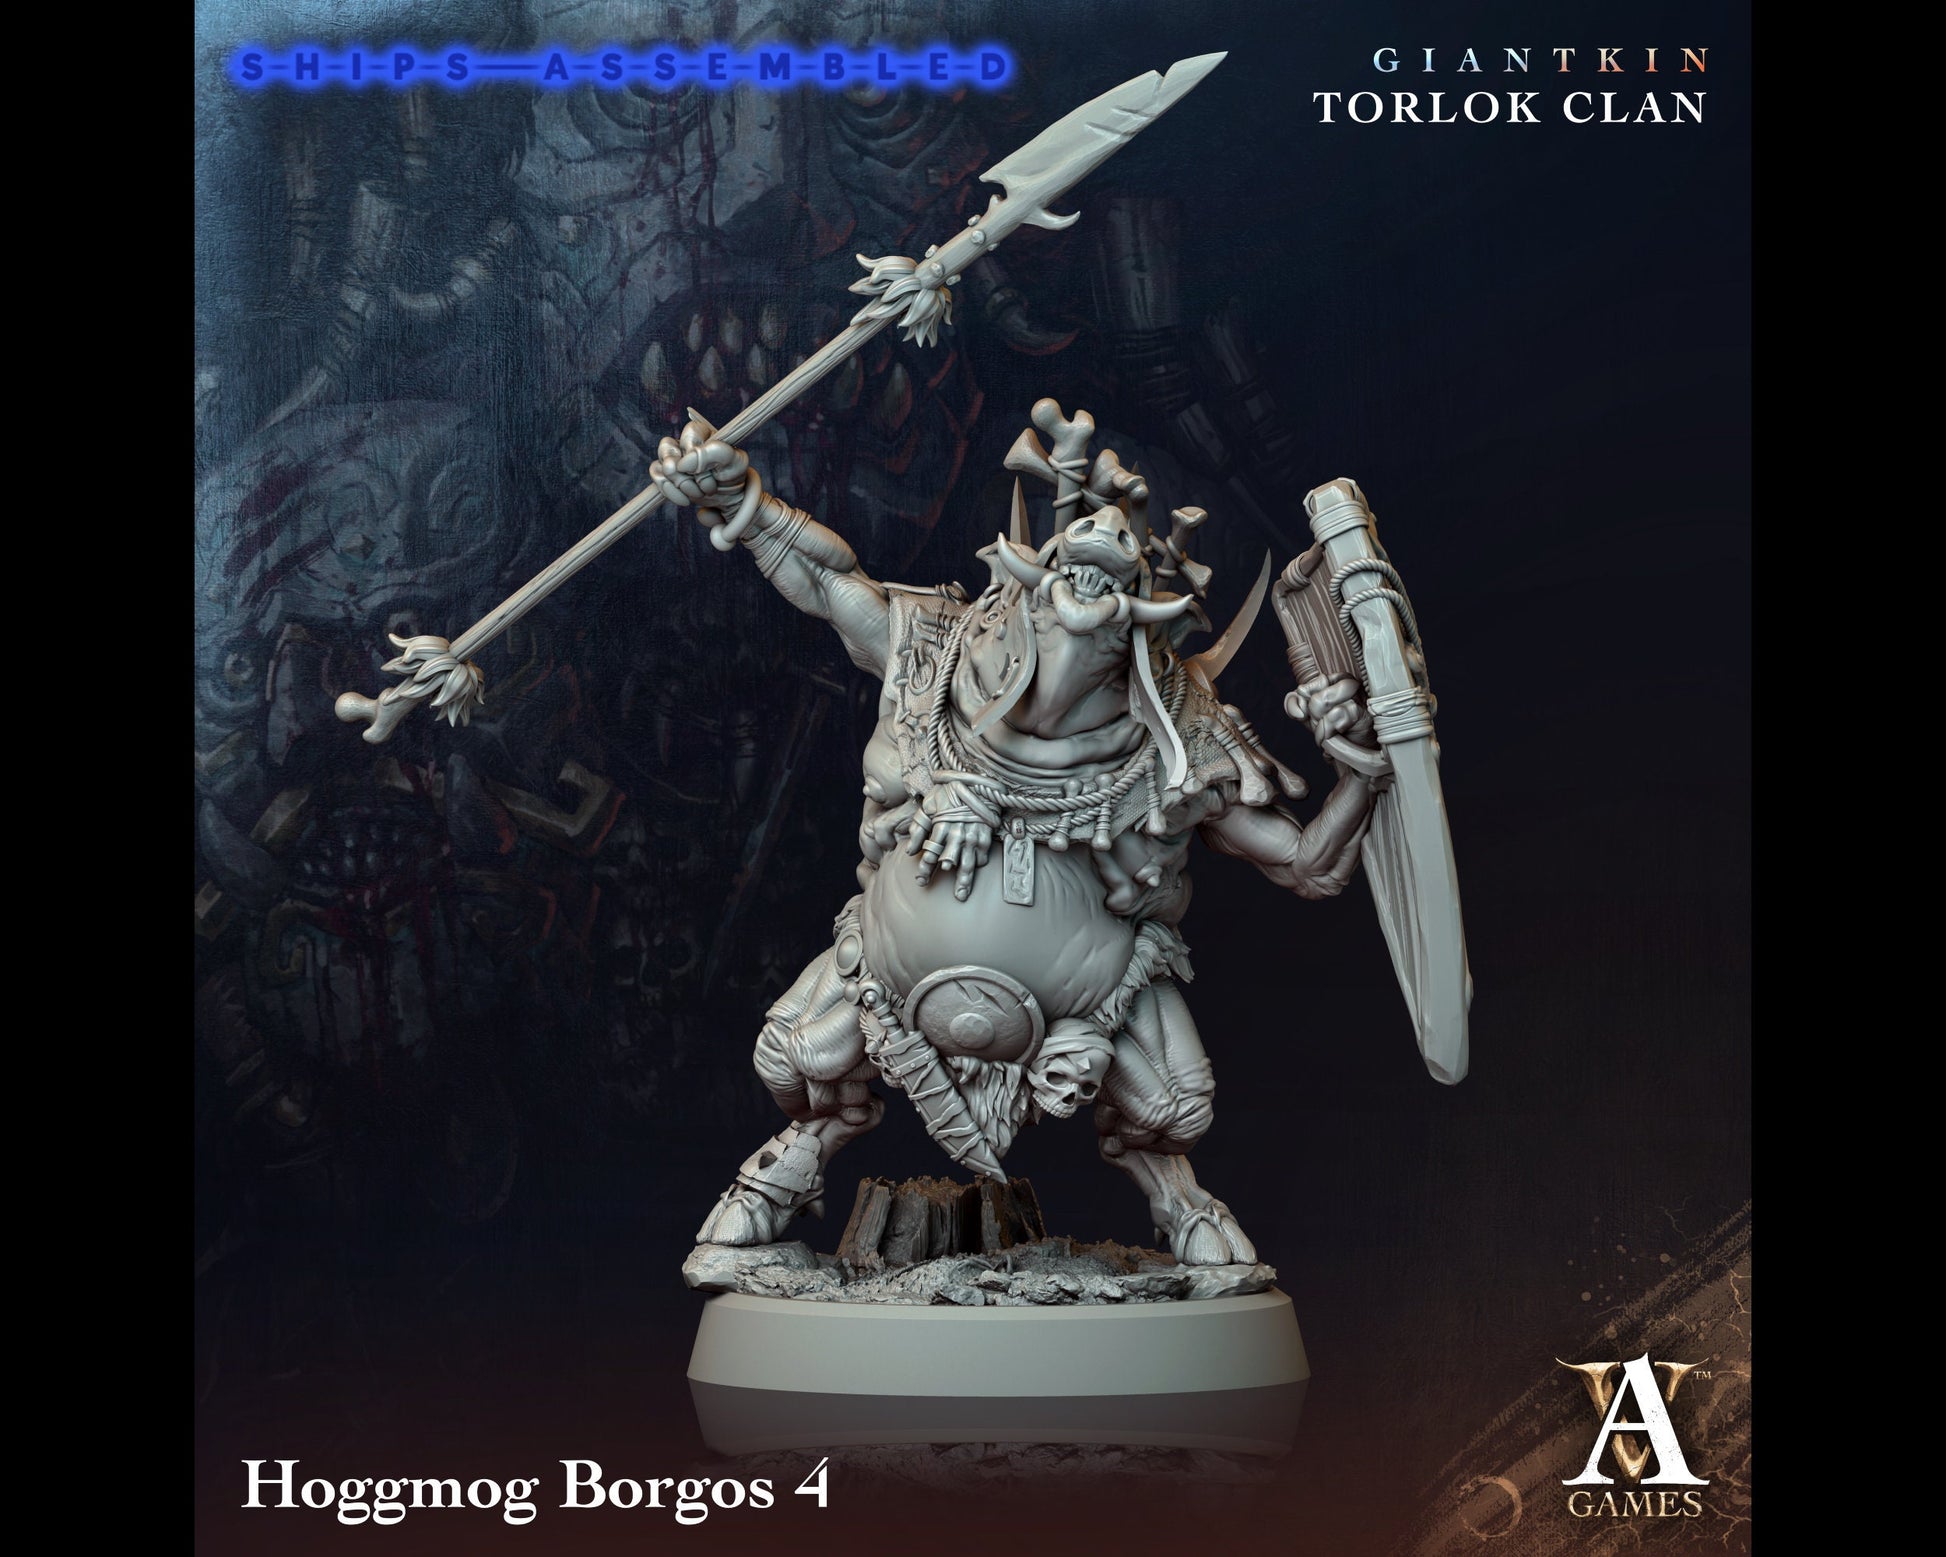 Hoggmog Borgos 4 - Giant Kin, Torlock Clan- Highly Detailed Resin 8k 3D Printed Miniature